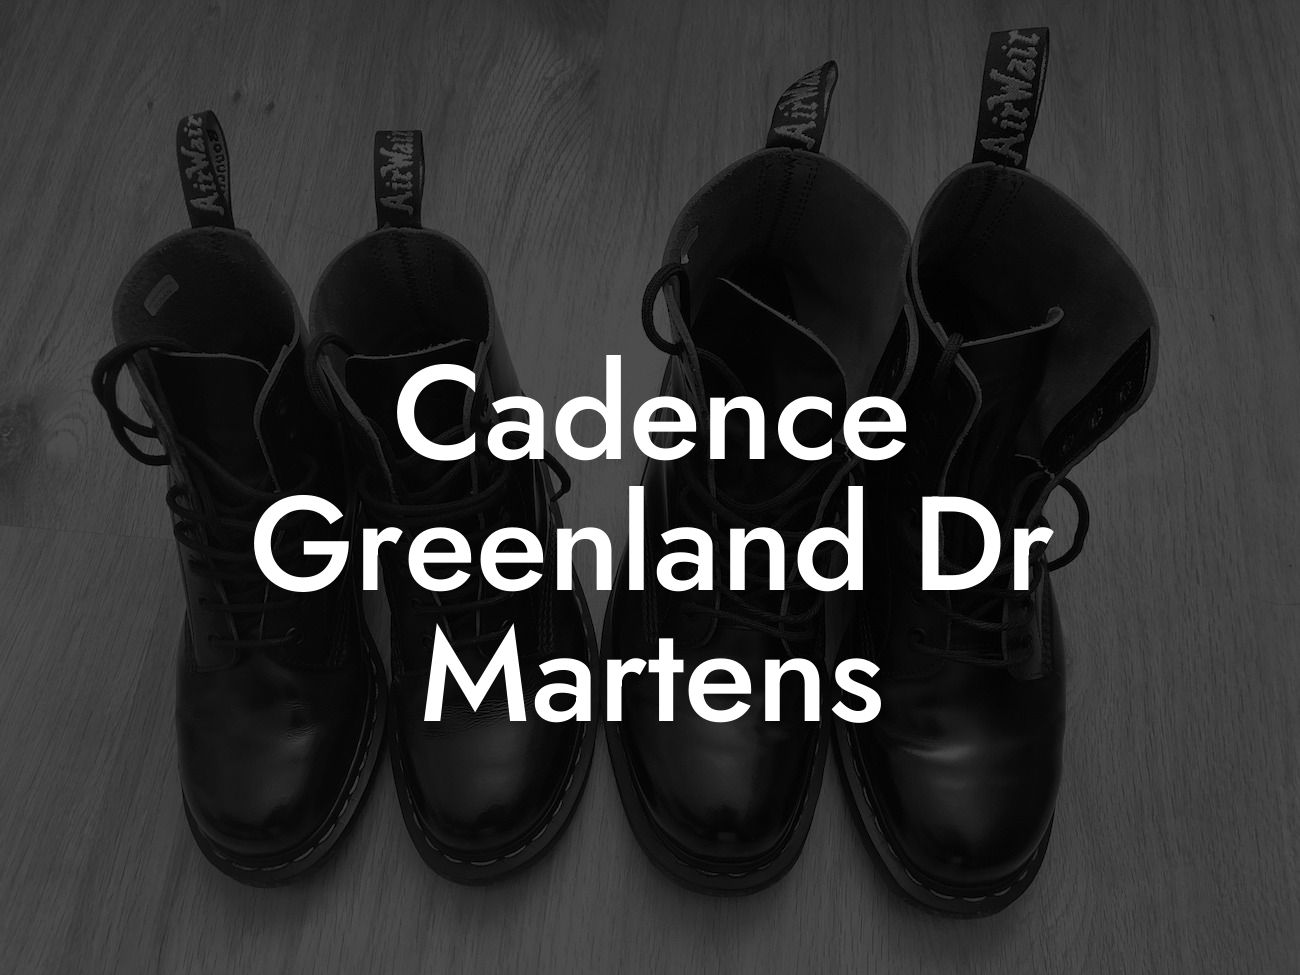 Cadence Greenland Dr Martens